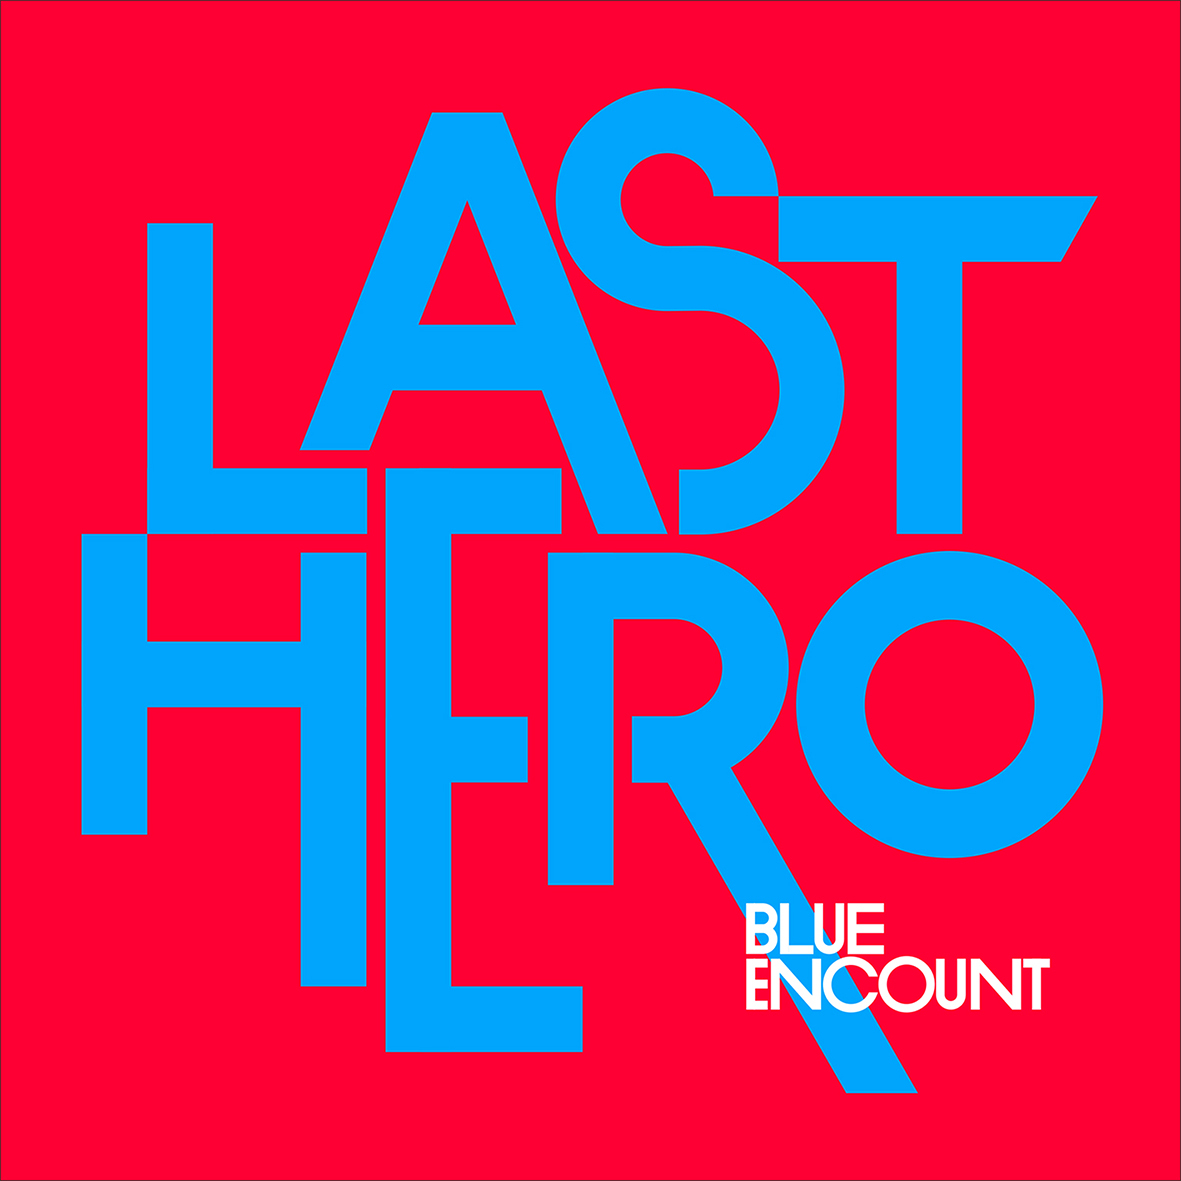 BLUE ENCOUNT/「LAST HERO - 初回盤」